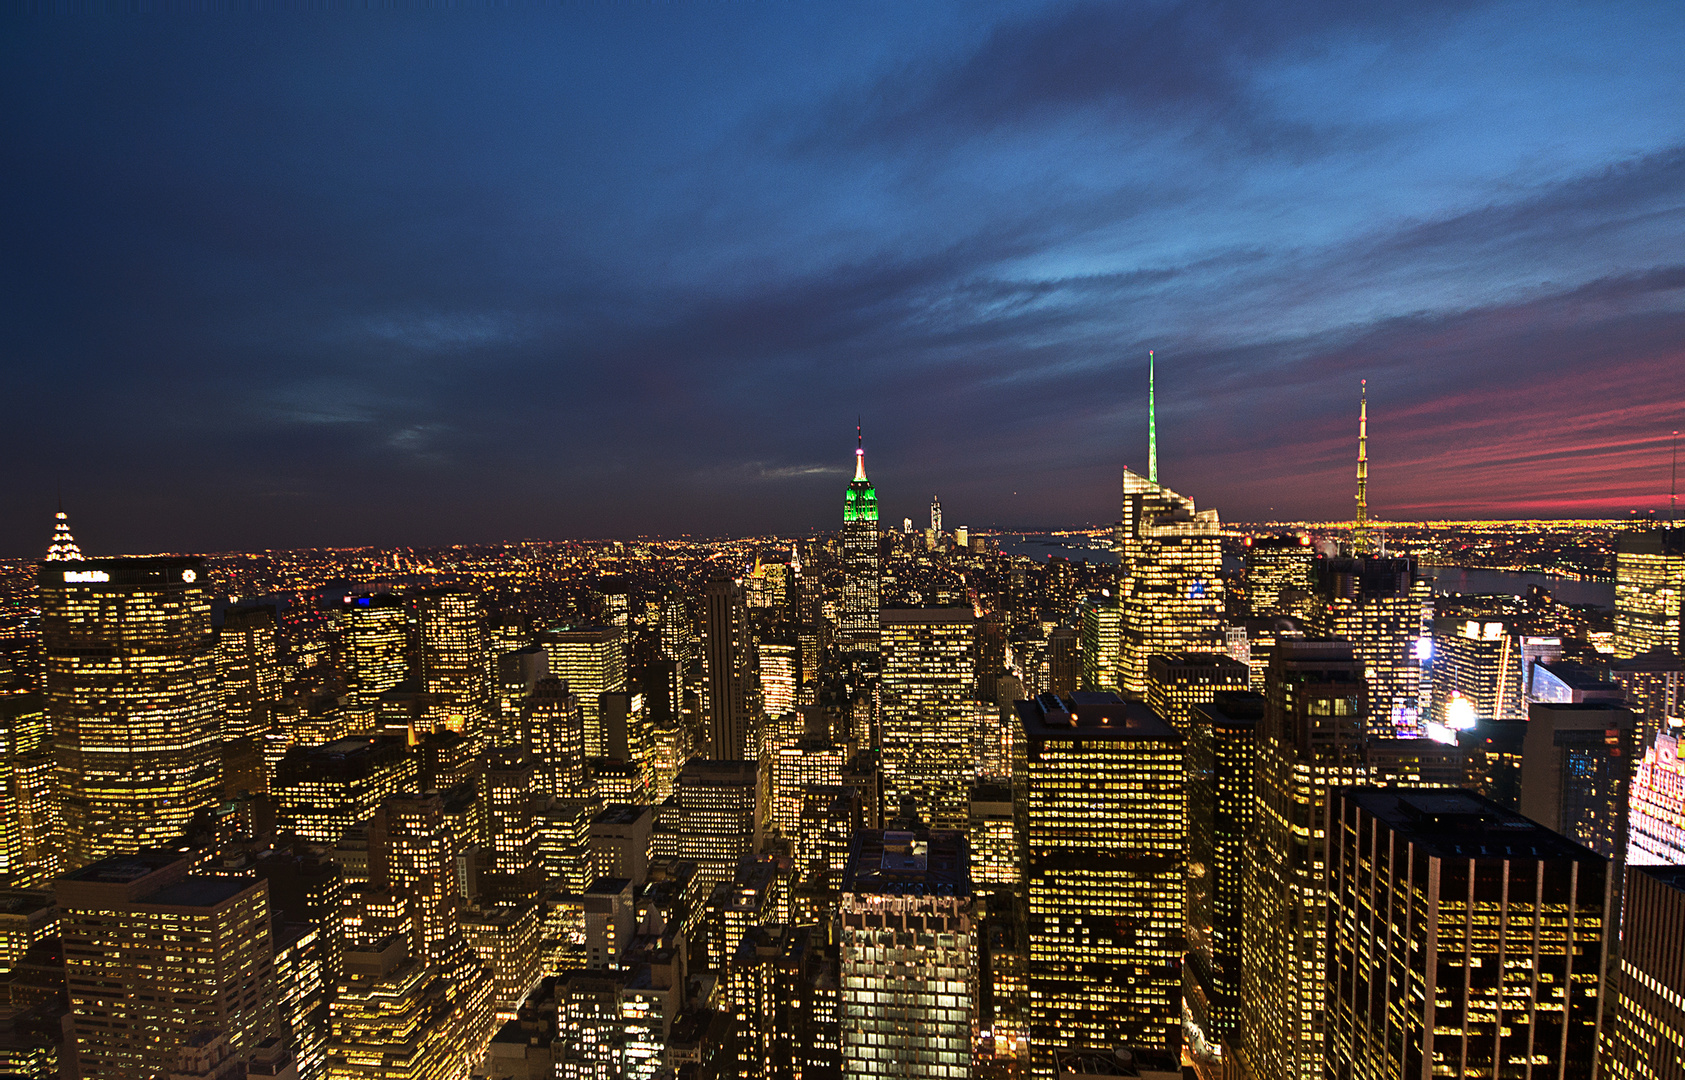 NEW YORK CITY LIGHTS II